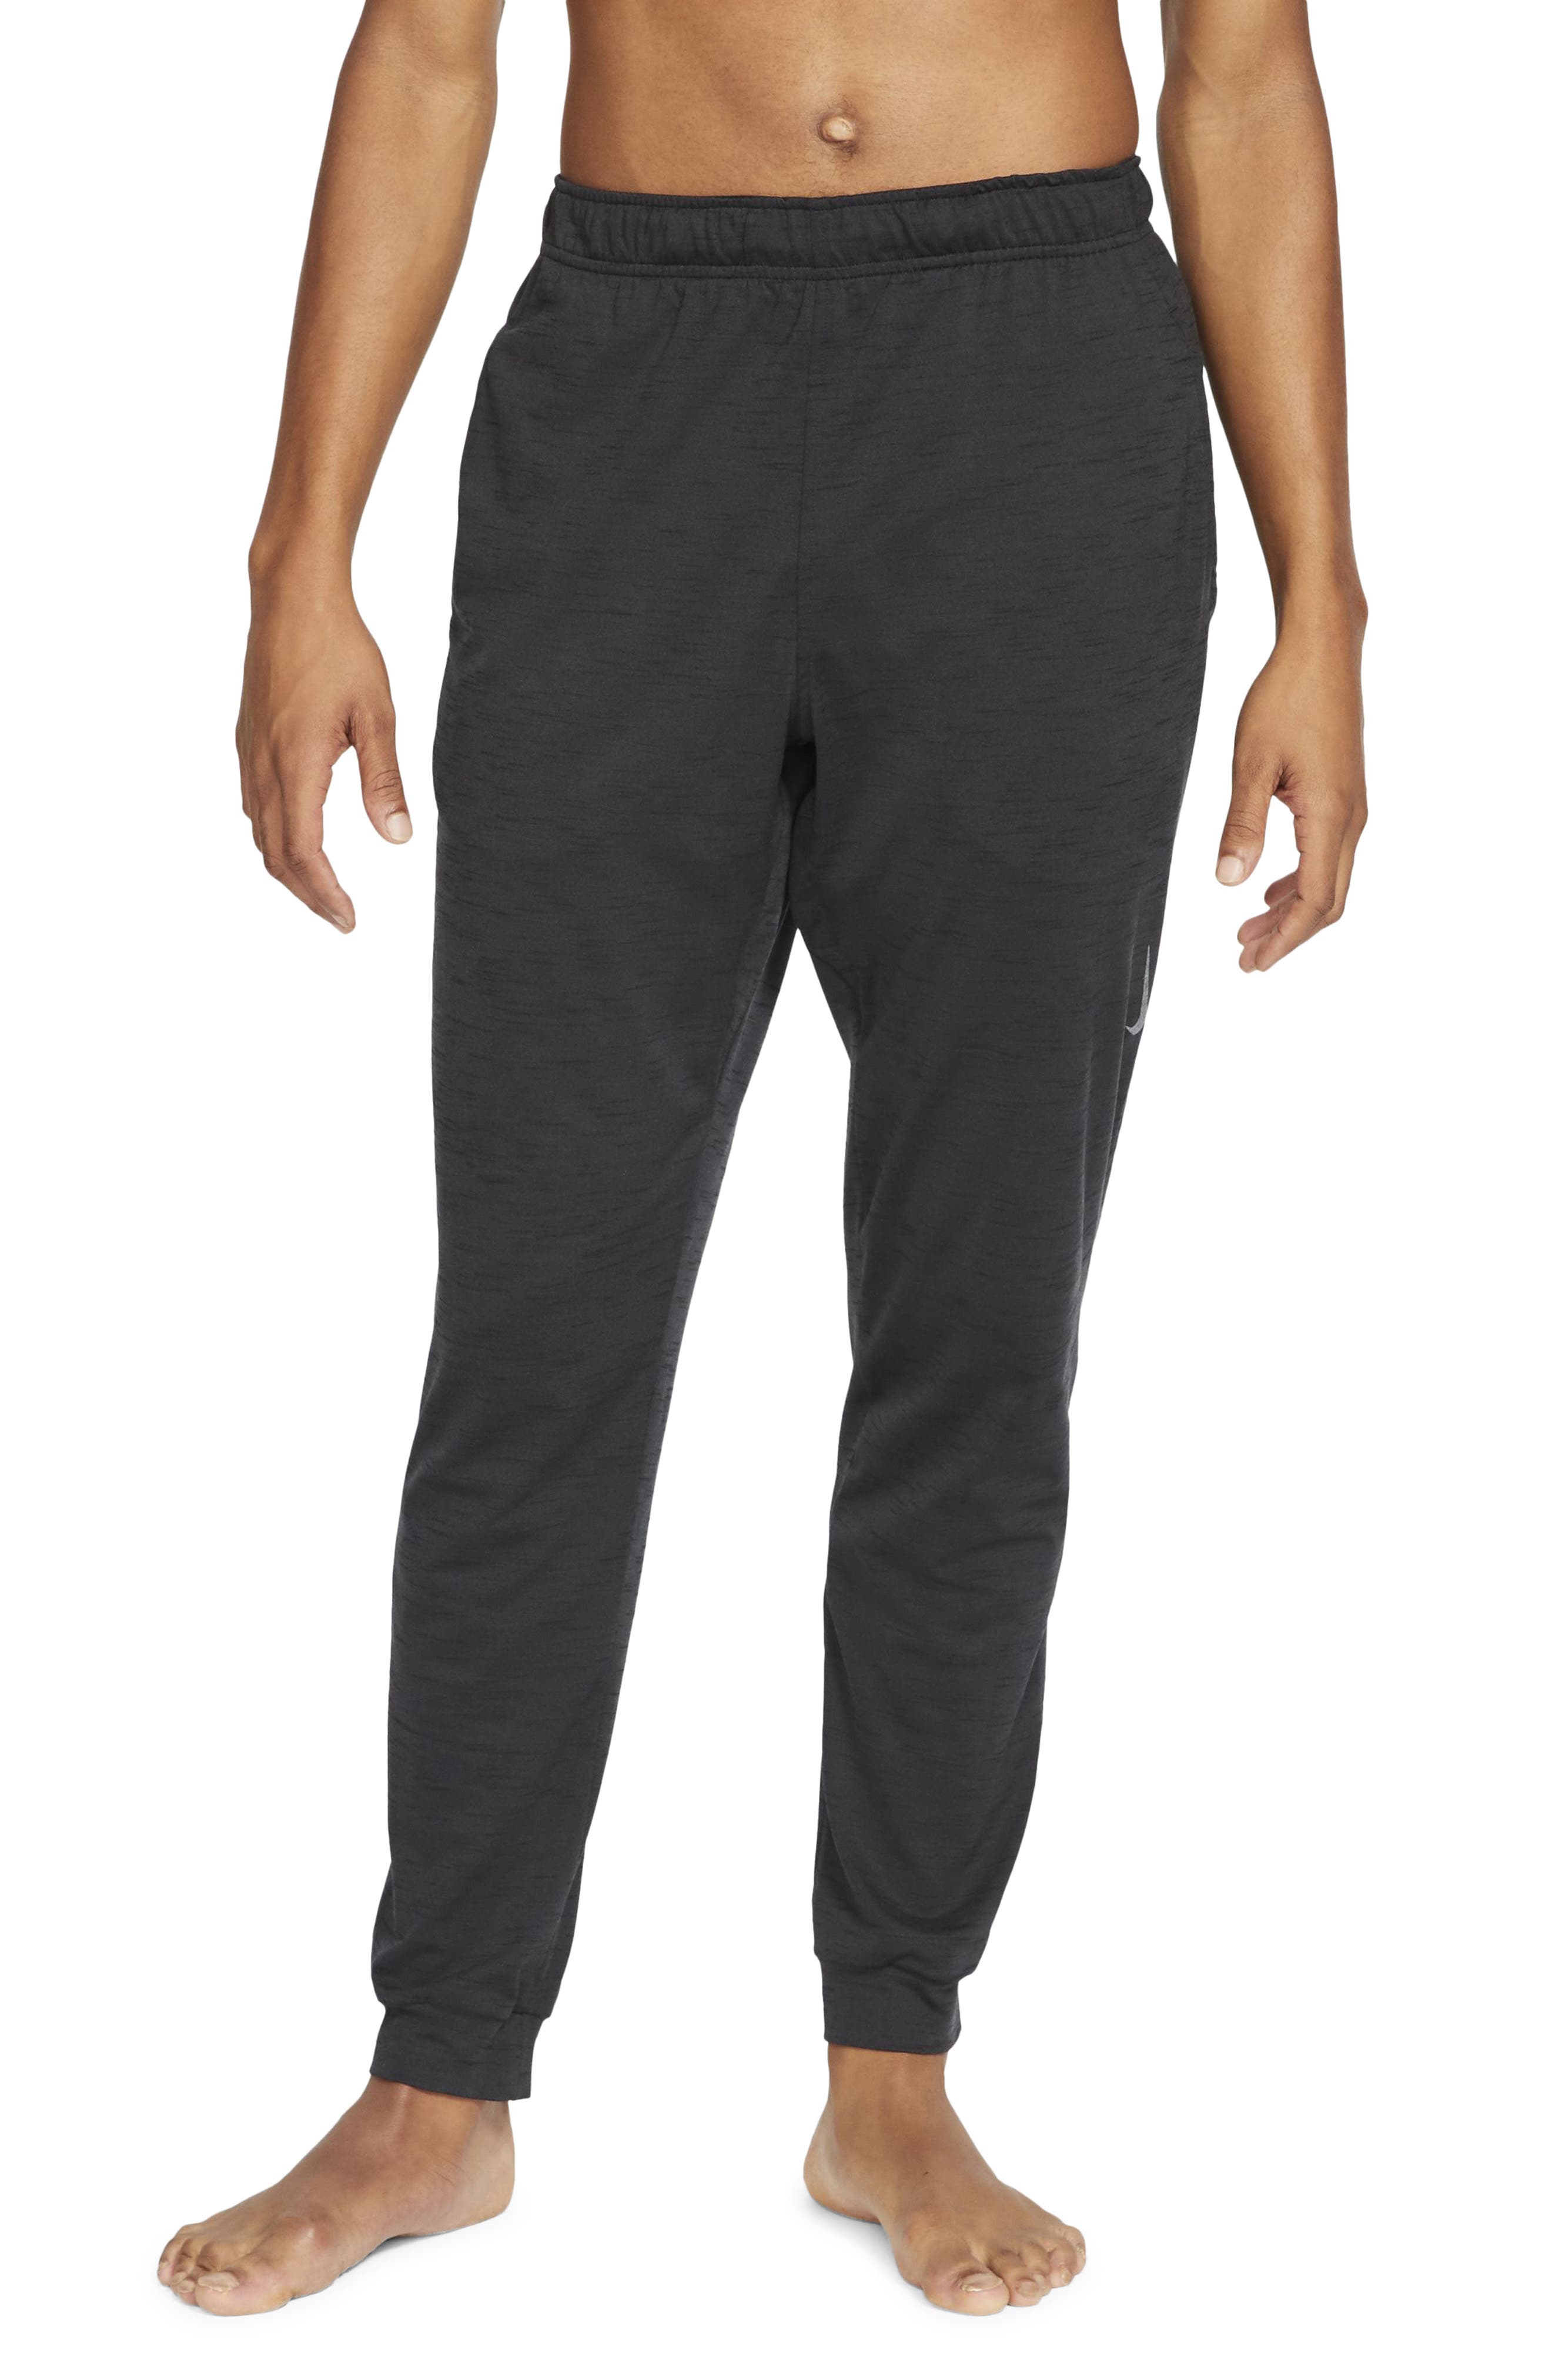 Buy > men's nike yoga pants > in stock